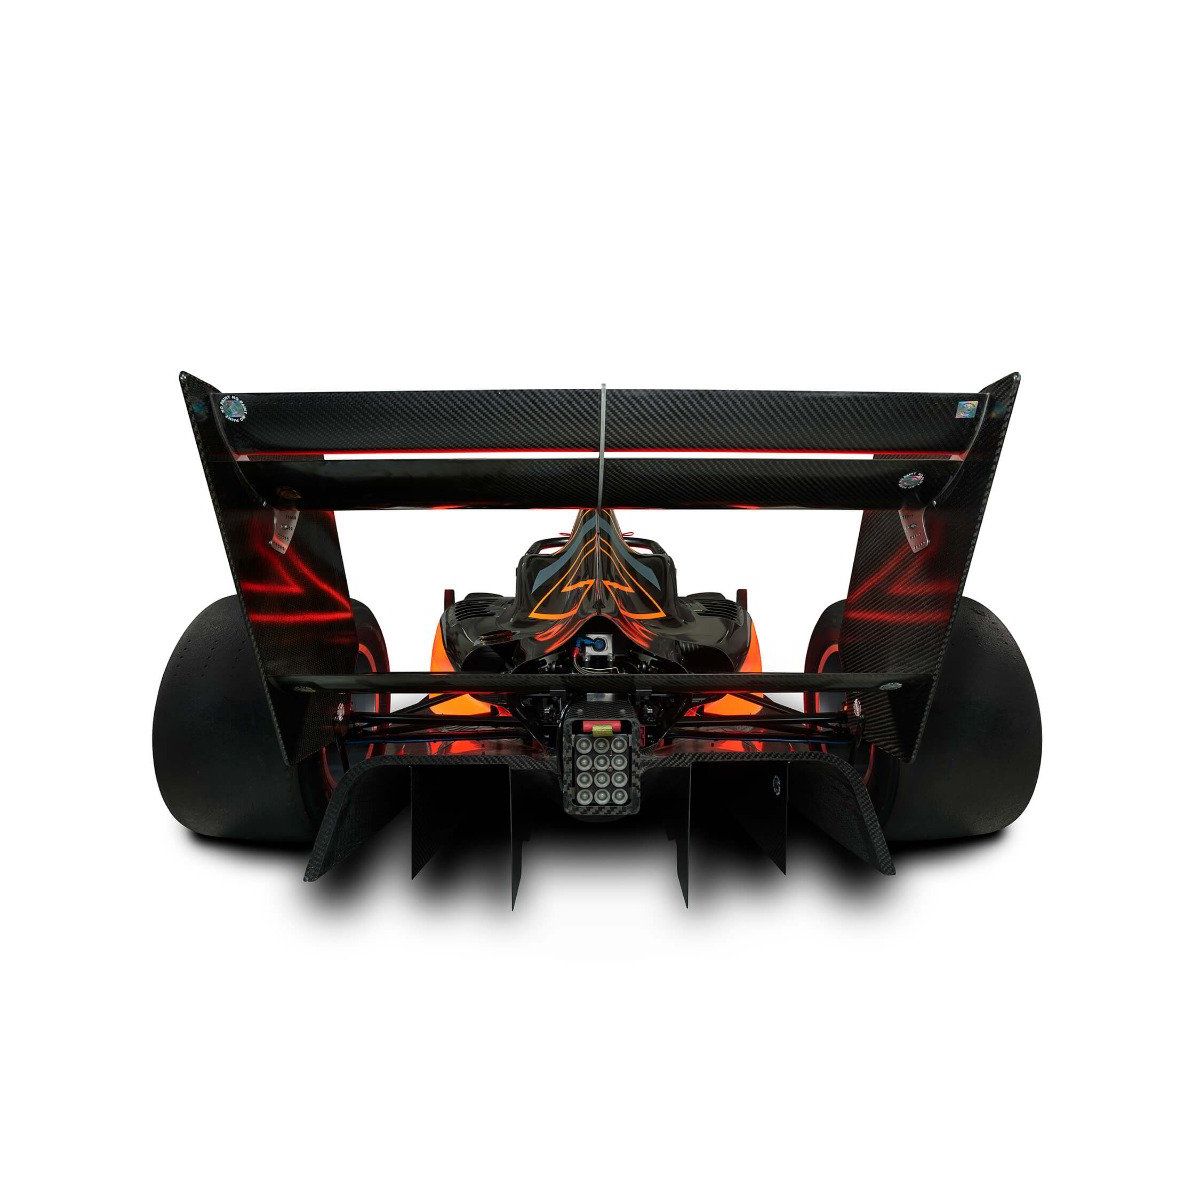 Formula 3 - Lower rear view